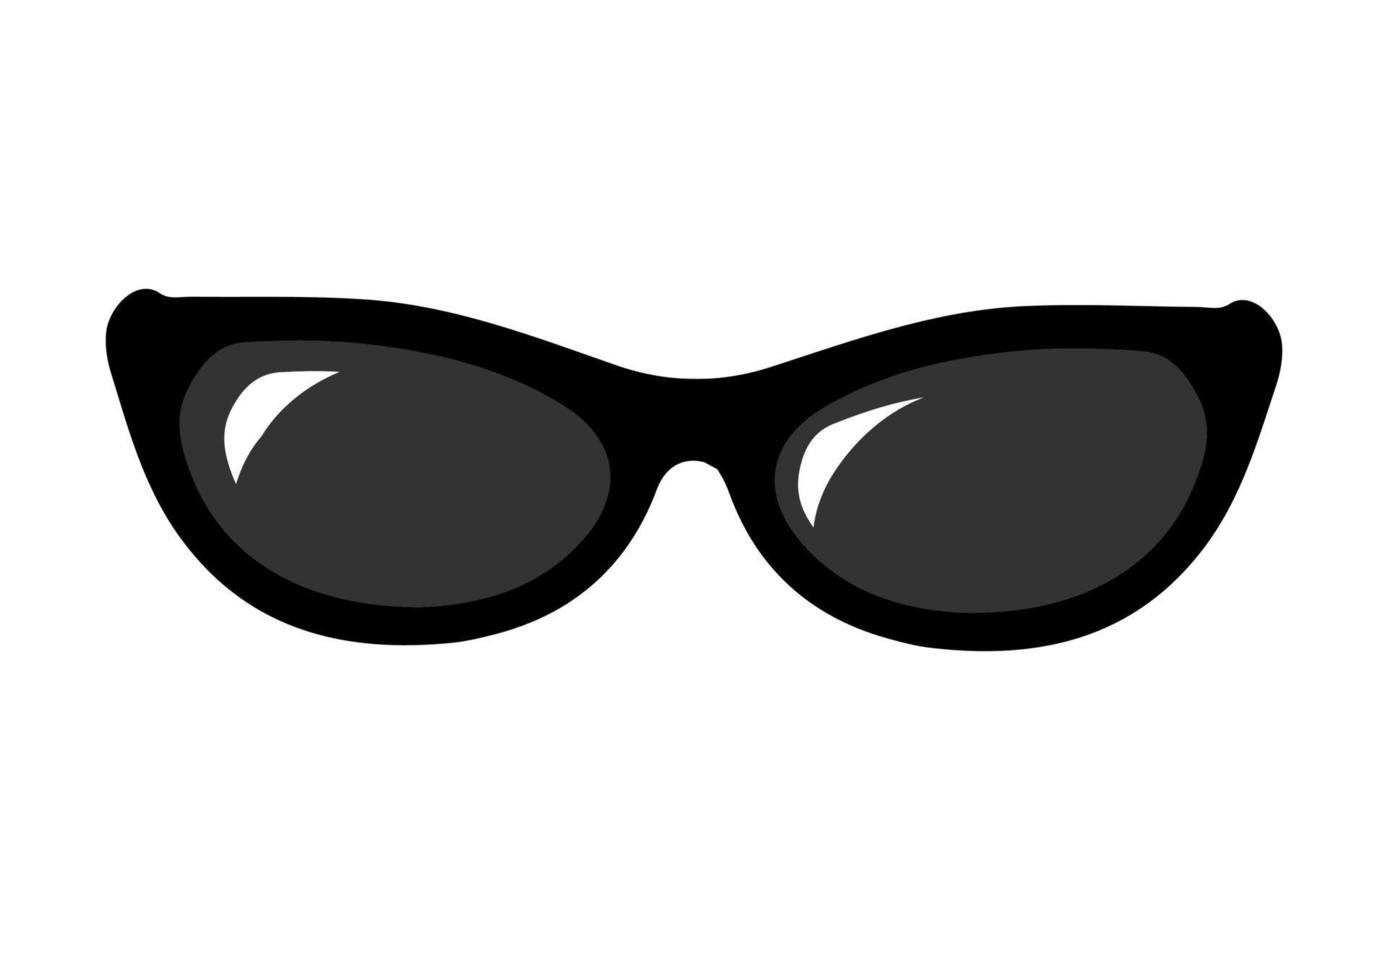 Sunglasses, accessories vector element. Glasses Icon for Graphic Design Projects